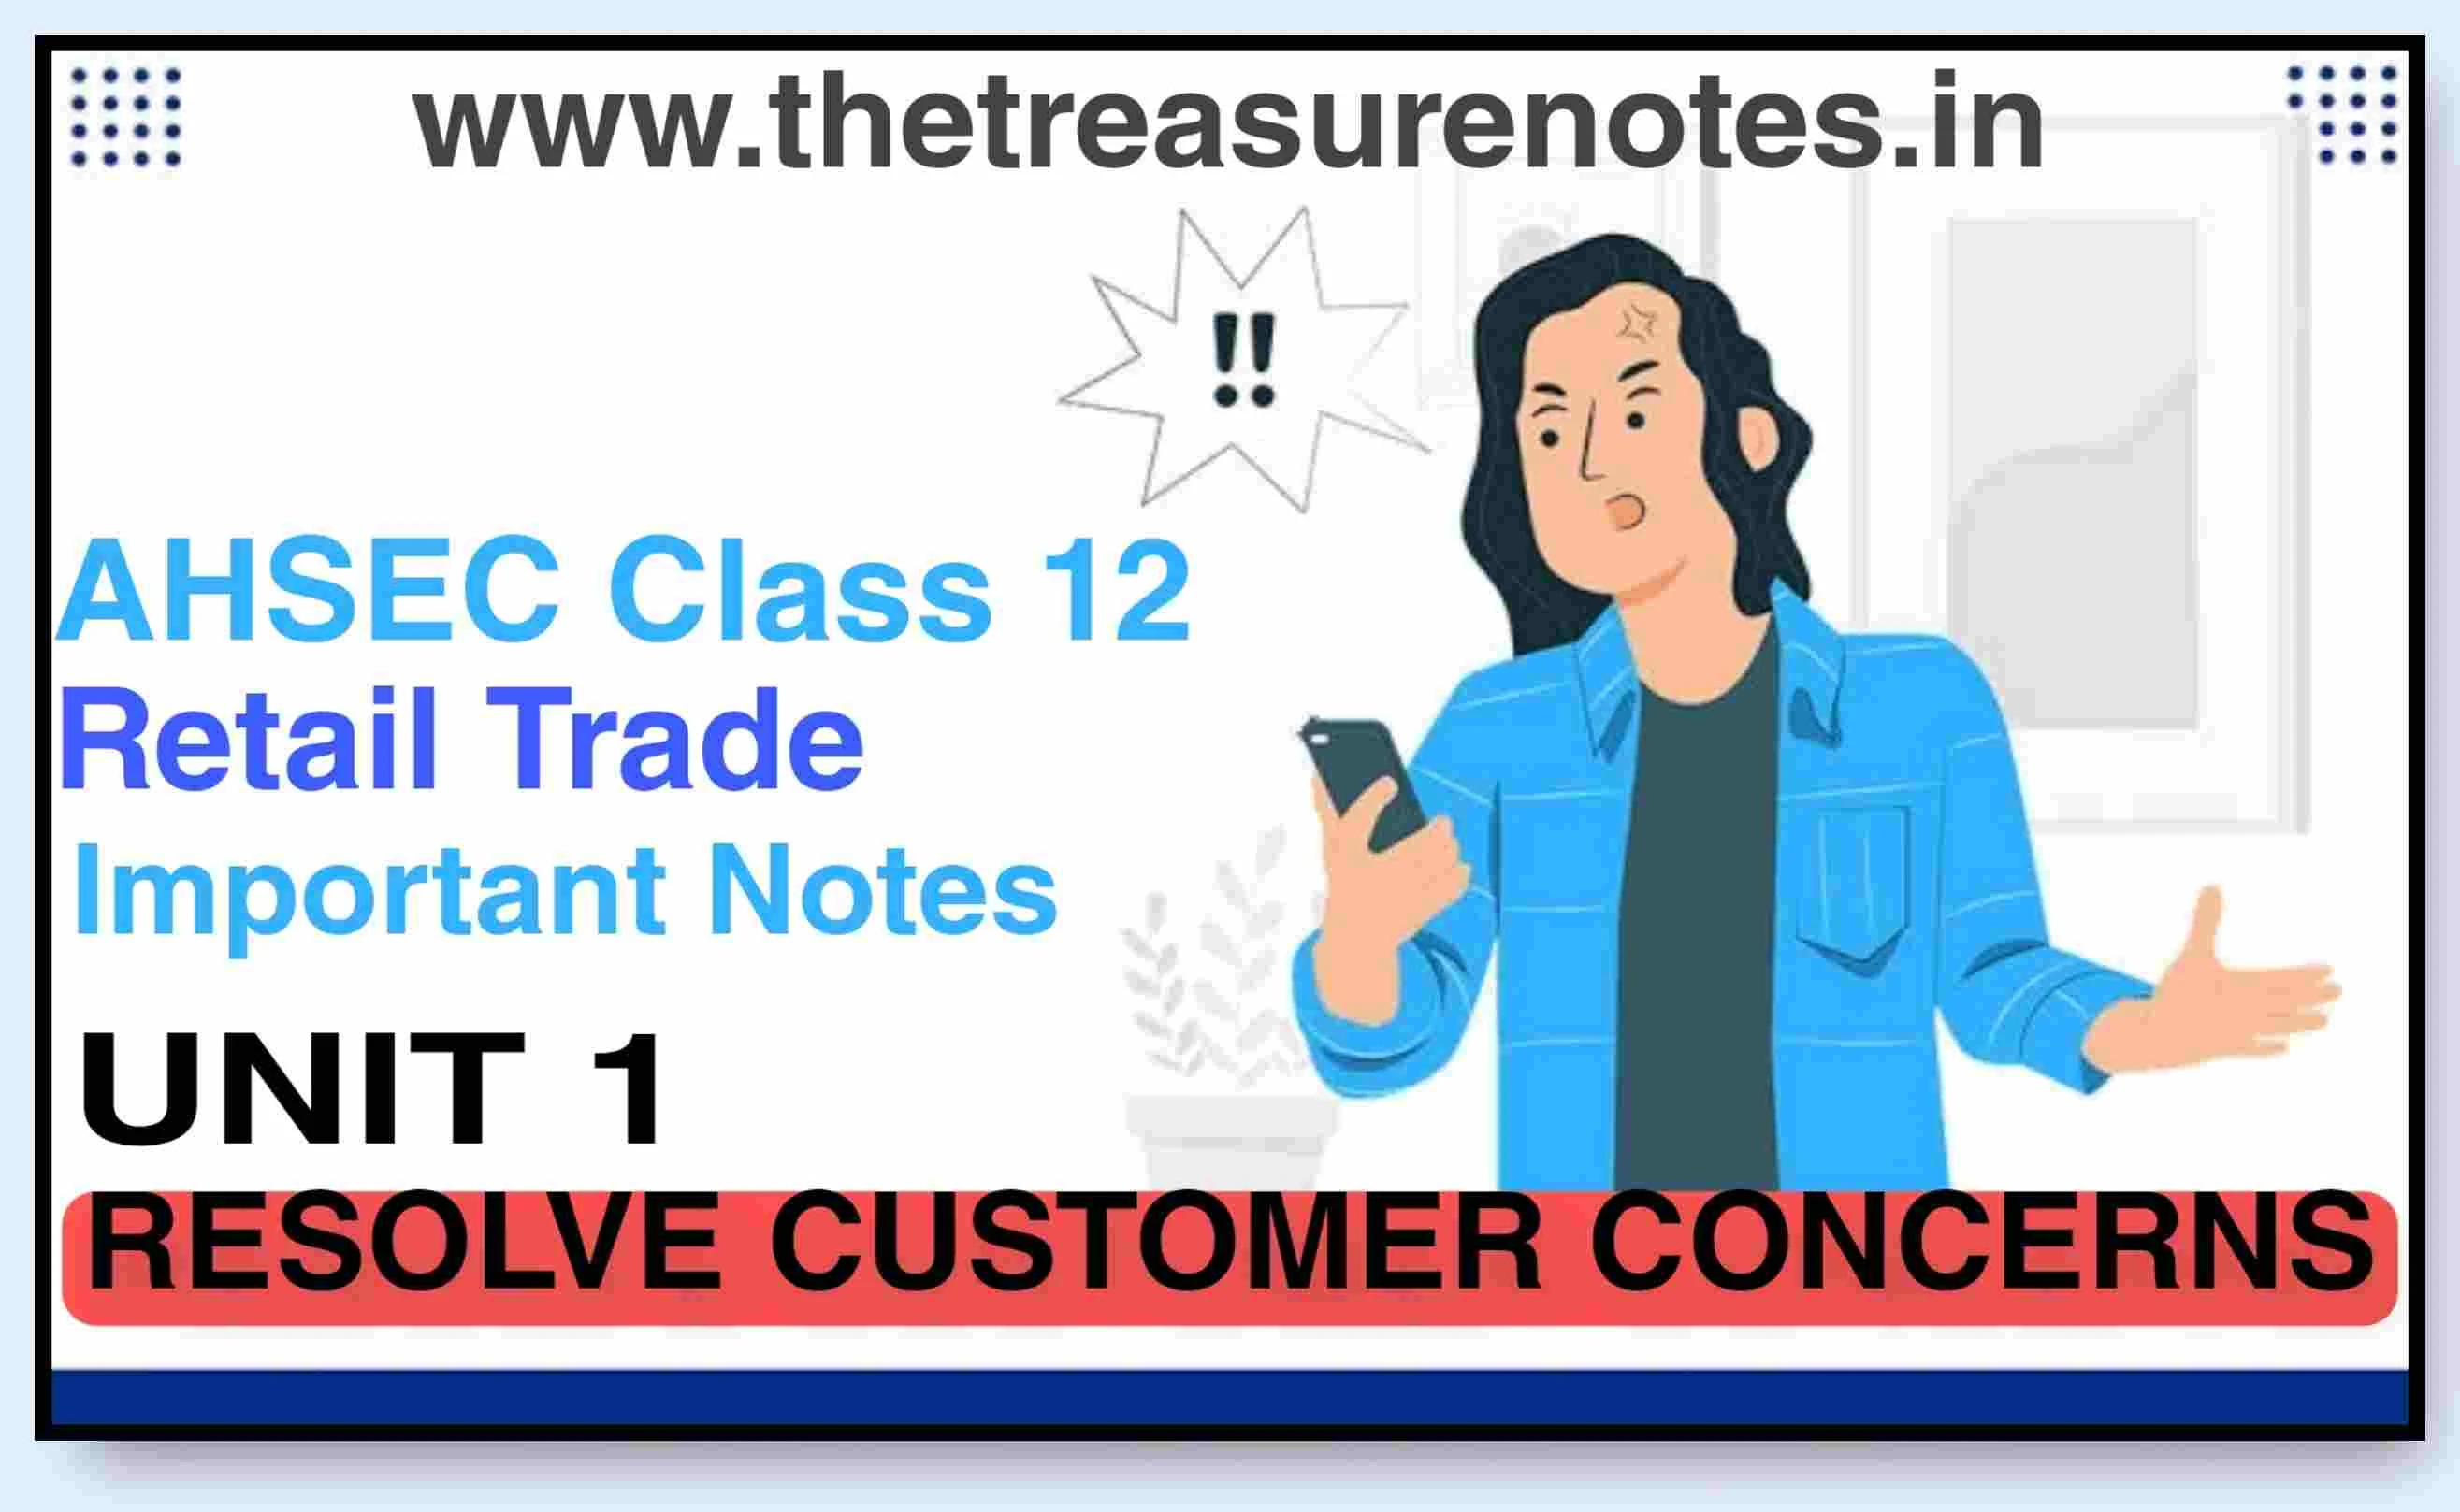 AHSEC Class 12: Retail Trade Unit 1: Resolve Customer Concerns Notes